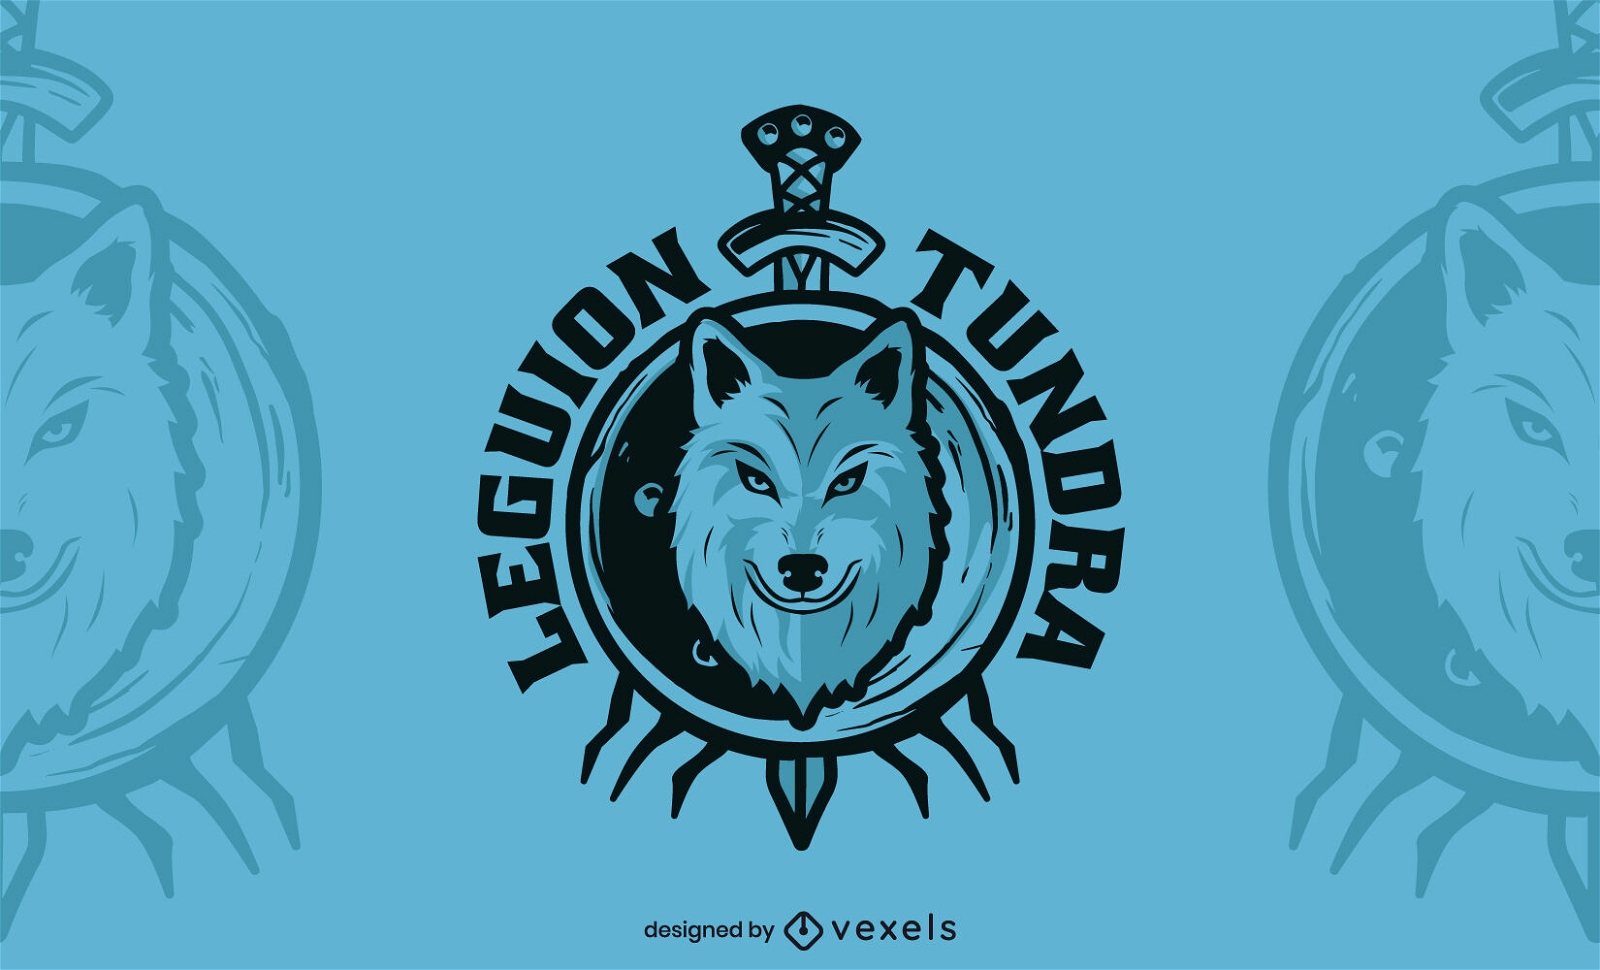 Wolf and sword logo design